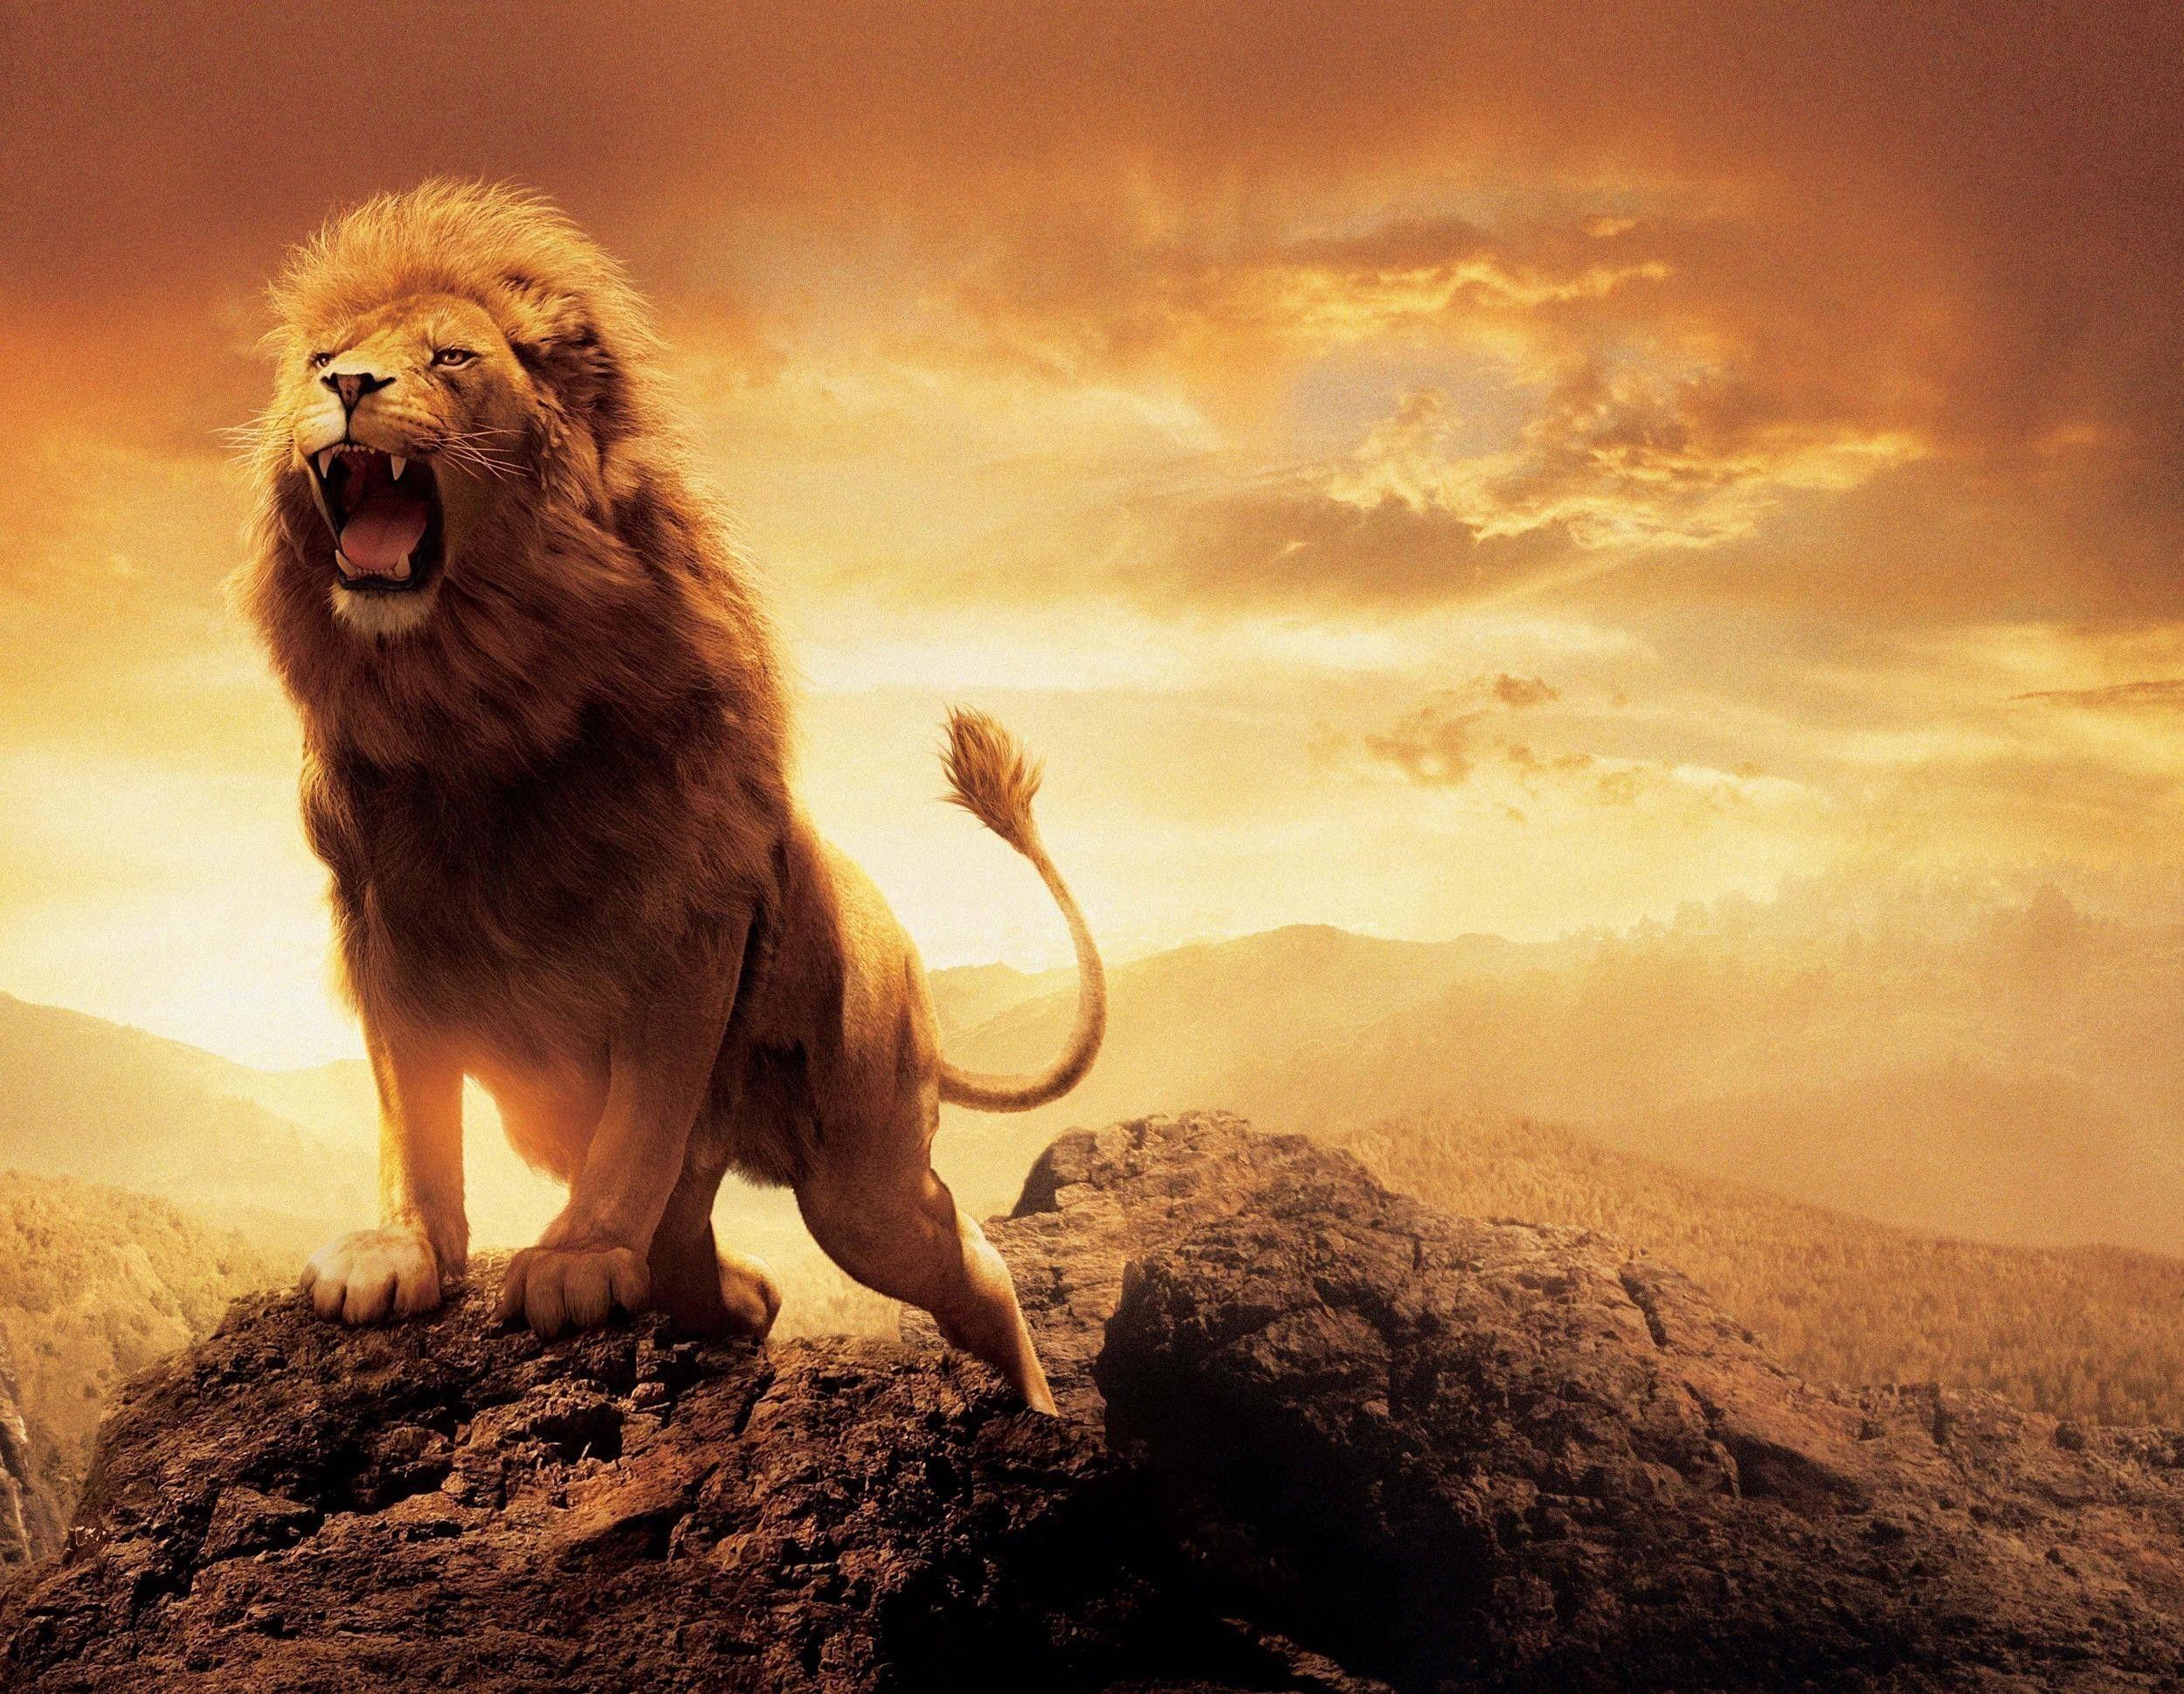 Lion 4K Ultra HD Wallpapers - Top Free Lion 4K Ultra HD Backgrounds ...